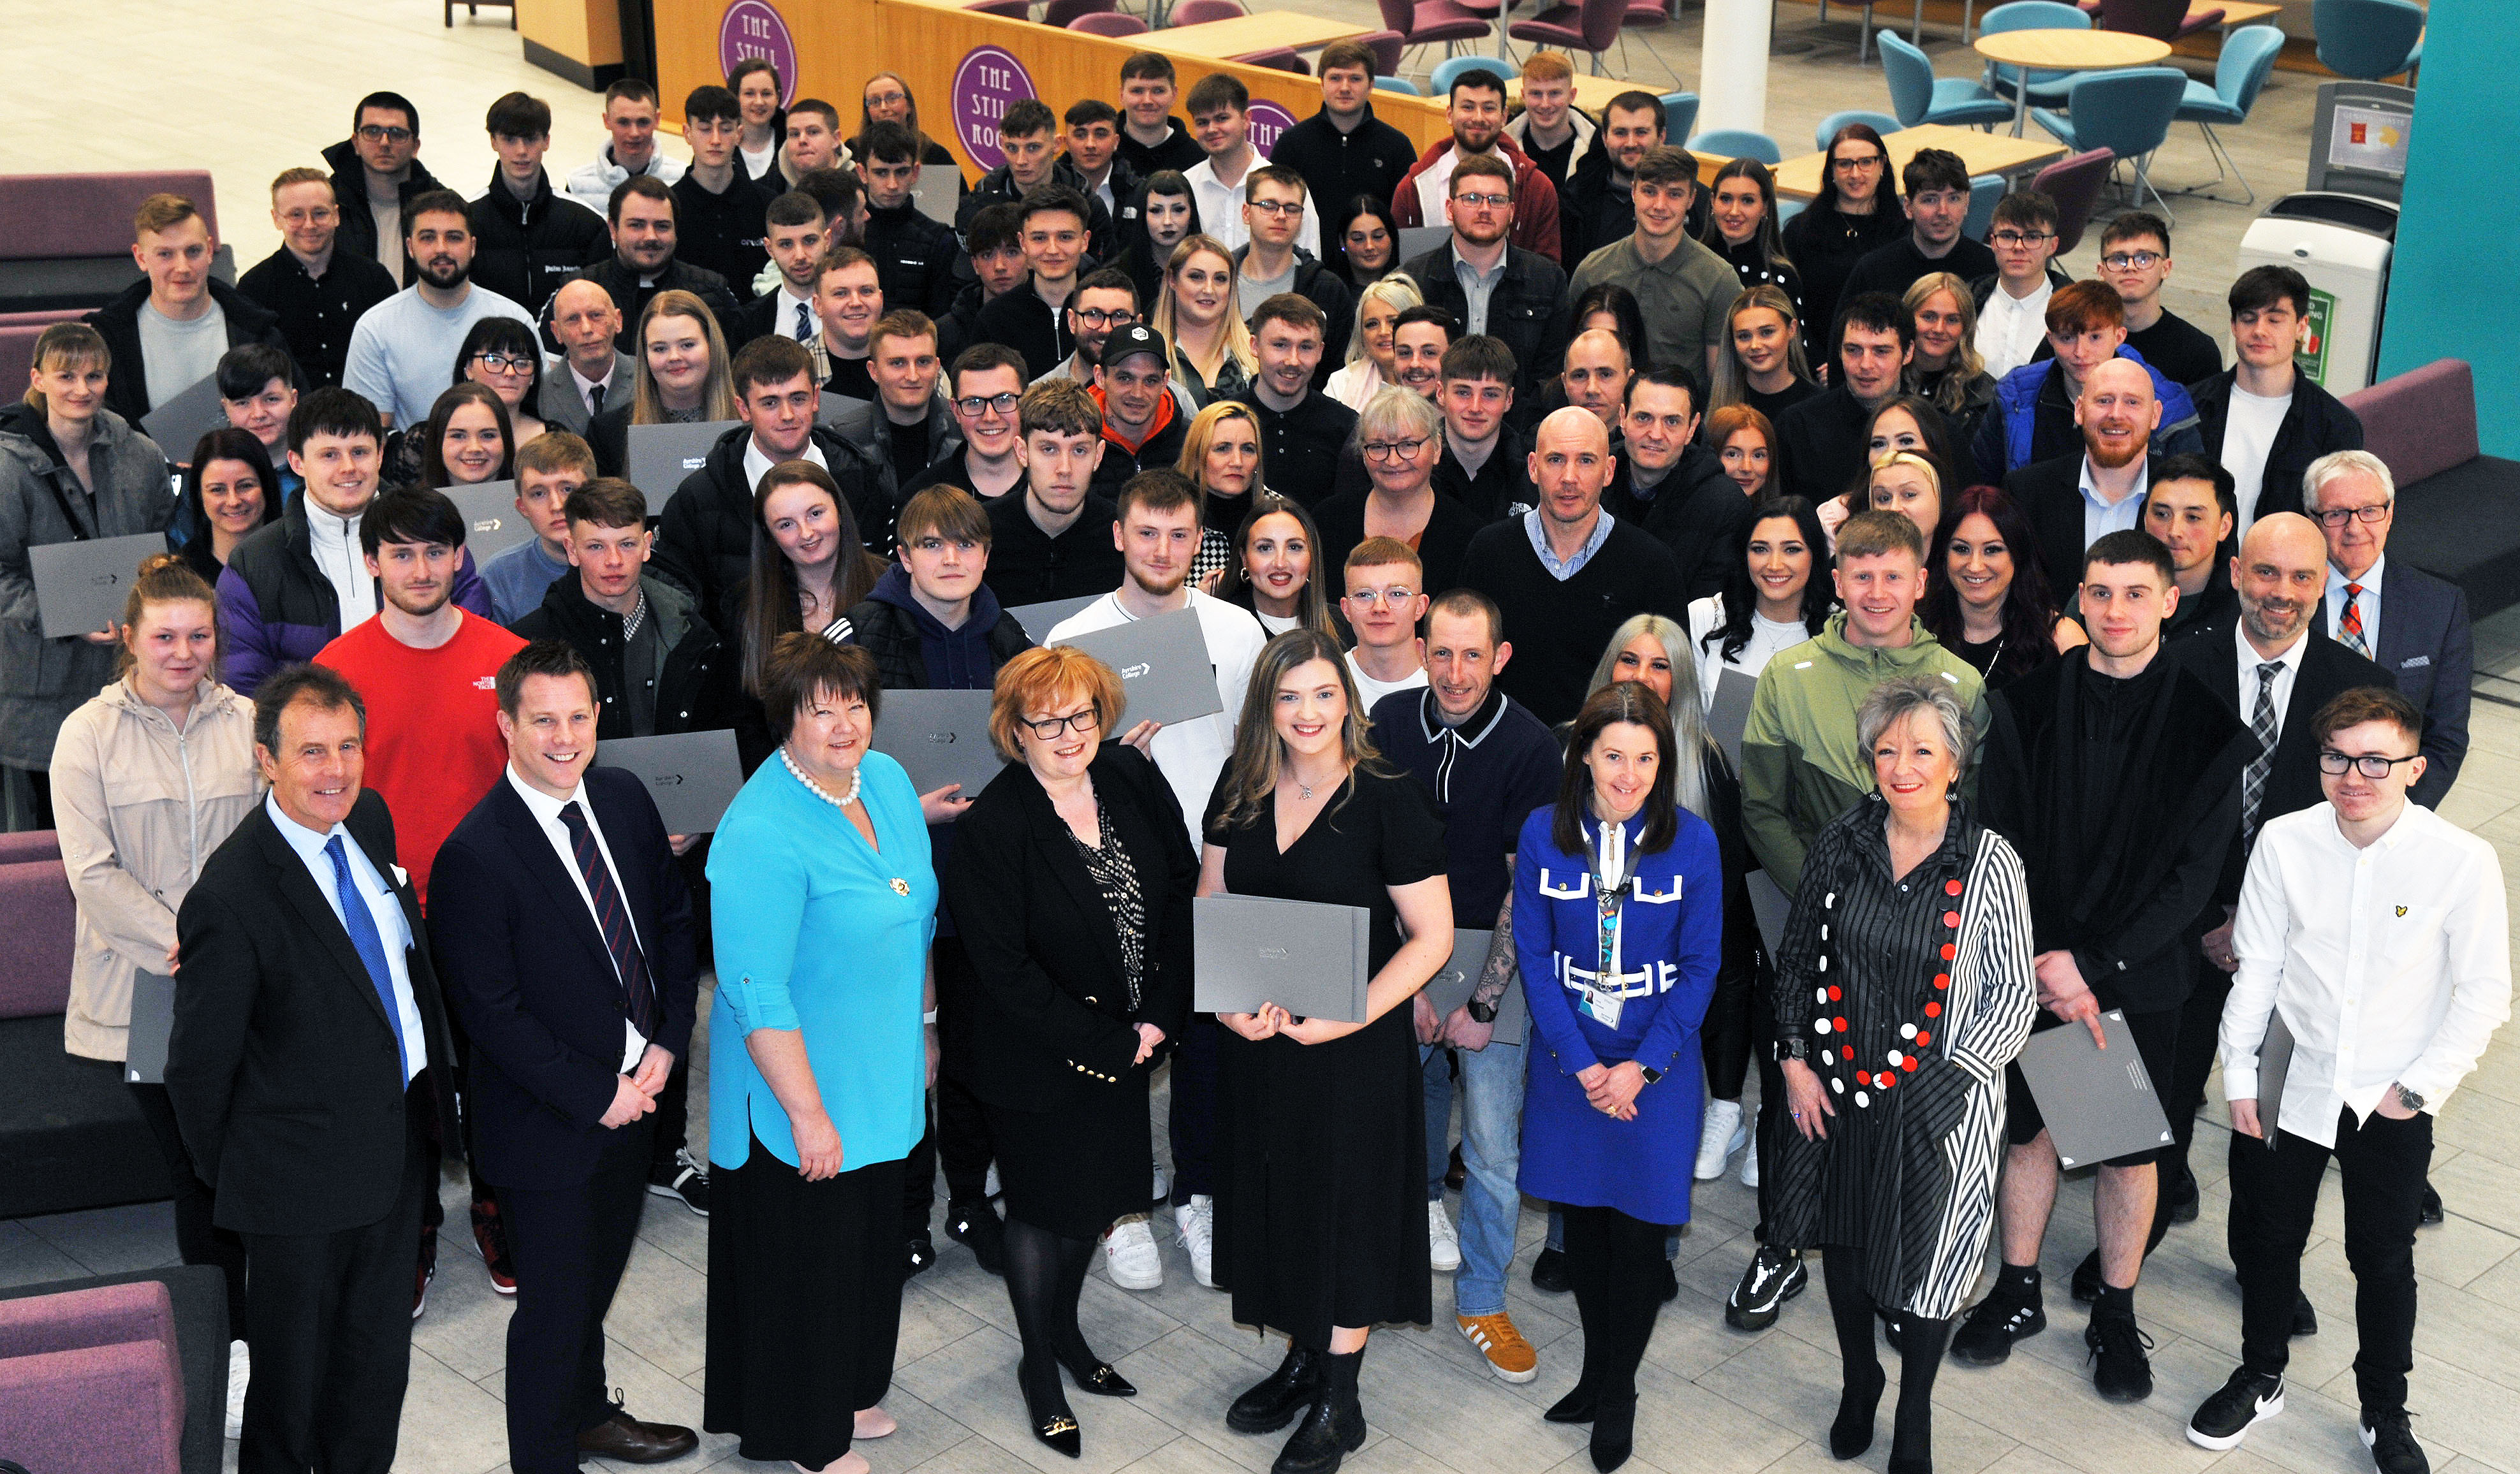 John Mather Awards ceremony returns at Ayrshire College